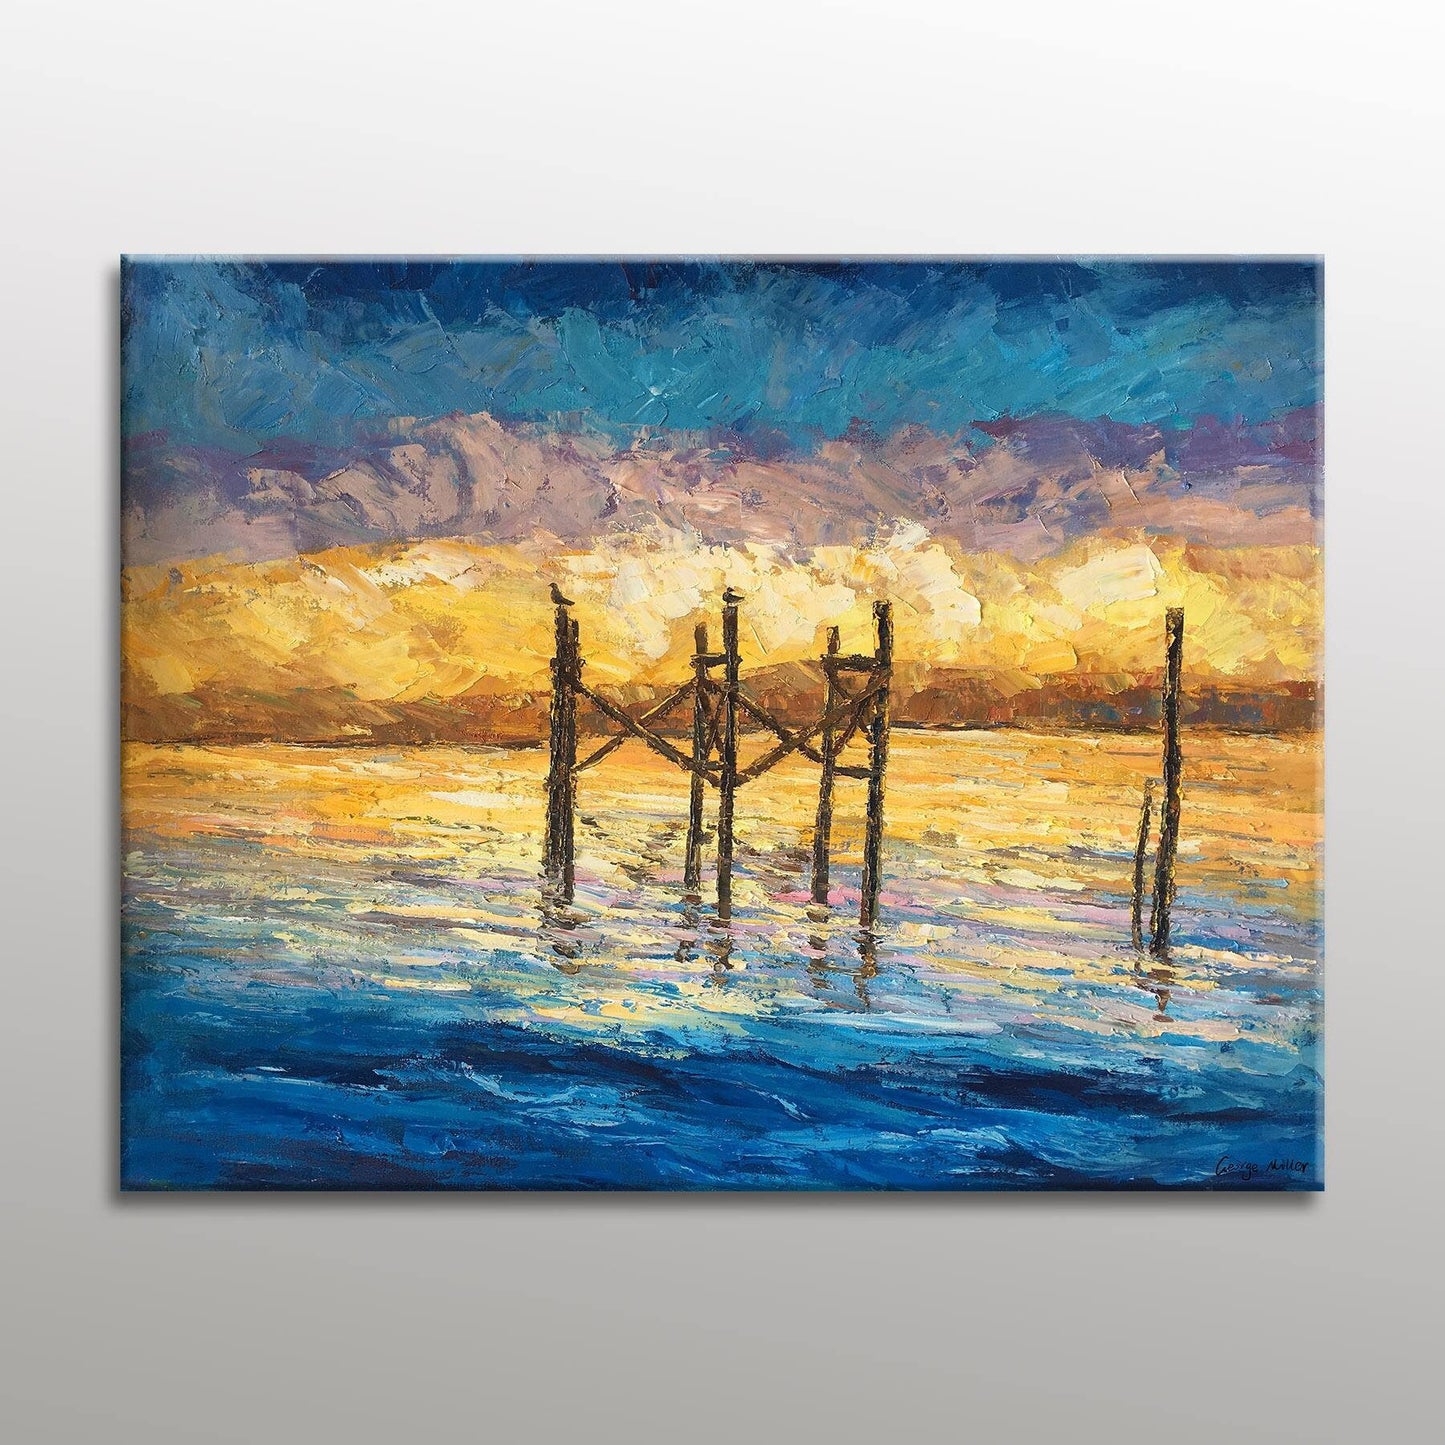 Sunrise By The Sea: Original Oil Painting | Oversized Seascape Art | 32x40, Seascape Oil Painting, Oversized Painting, Handmade